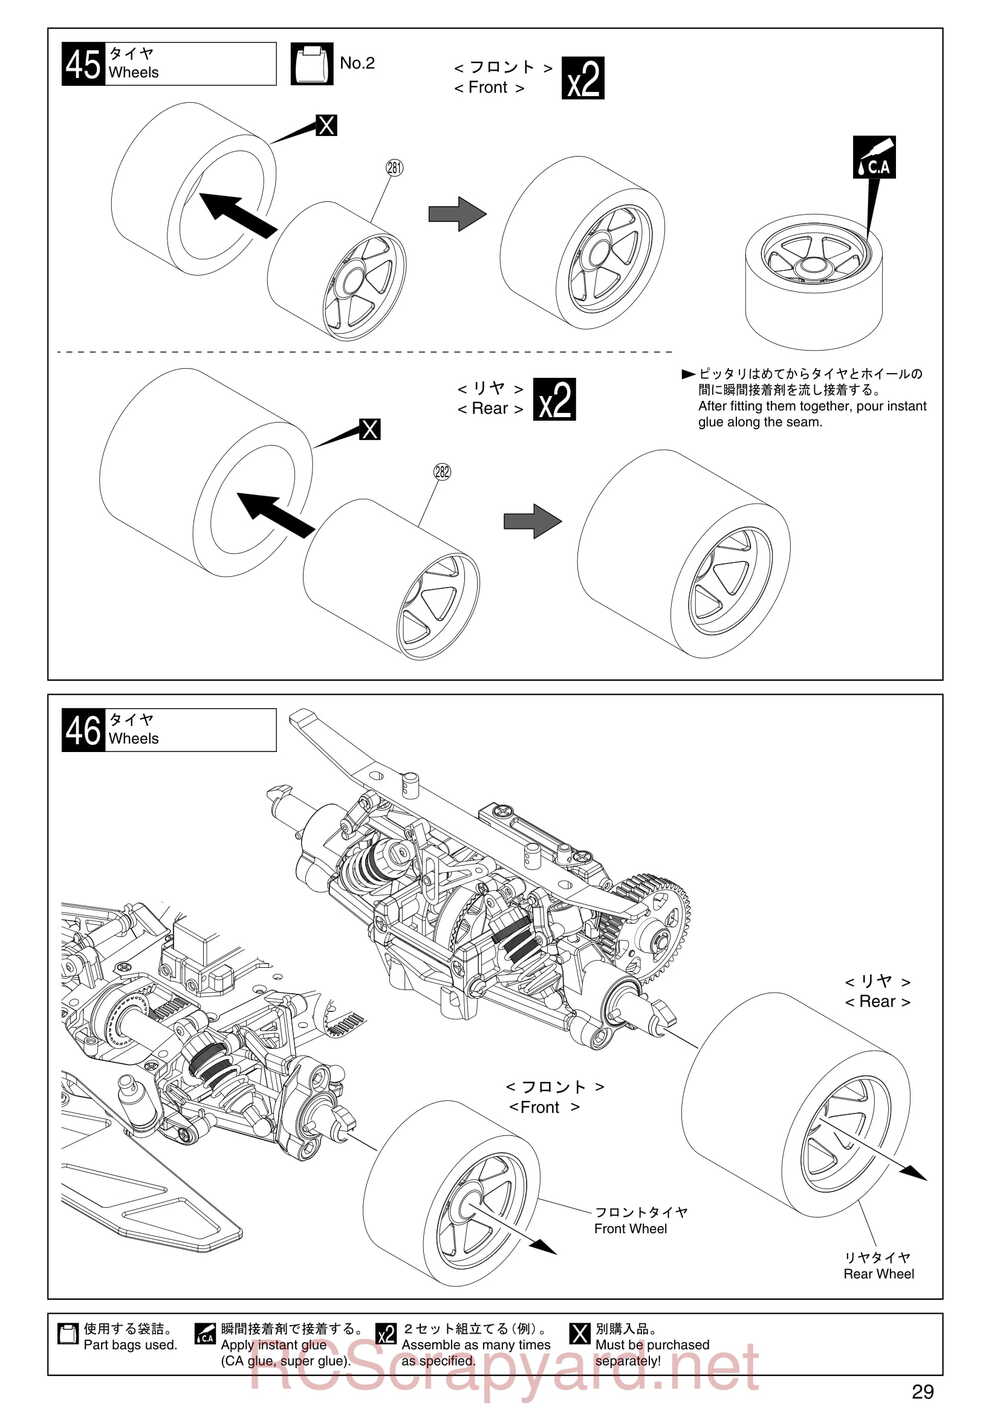 Kyosho - 31283 - Evolva-2003 - Manual - Page 29